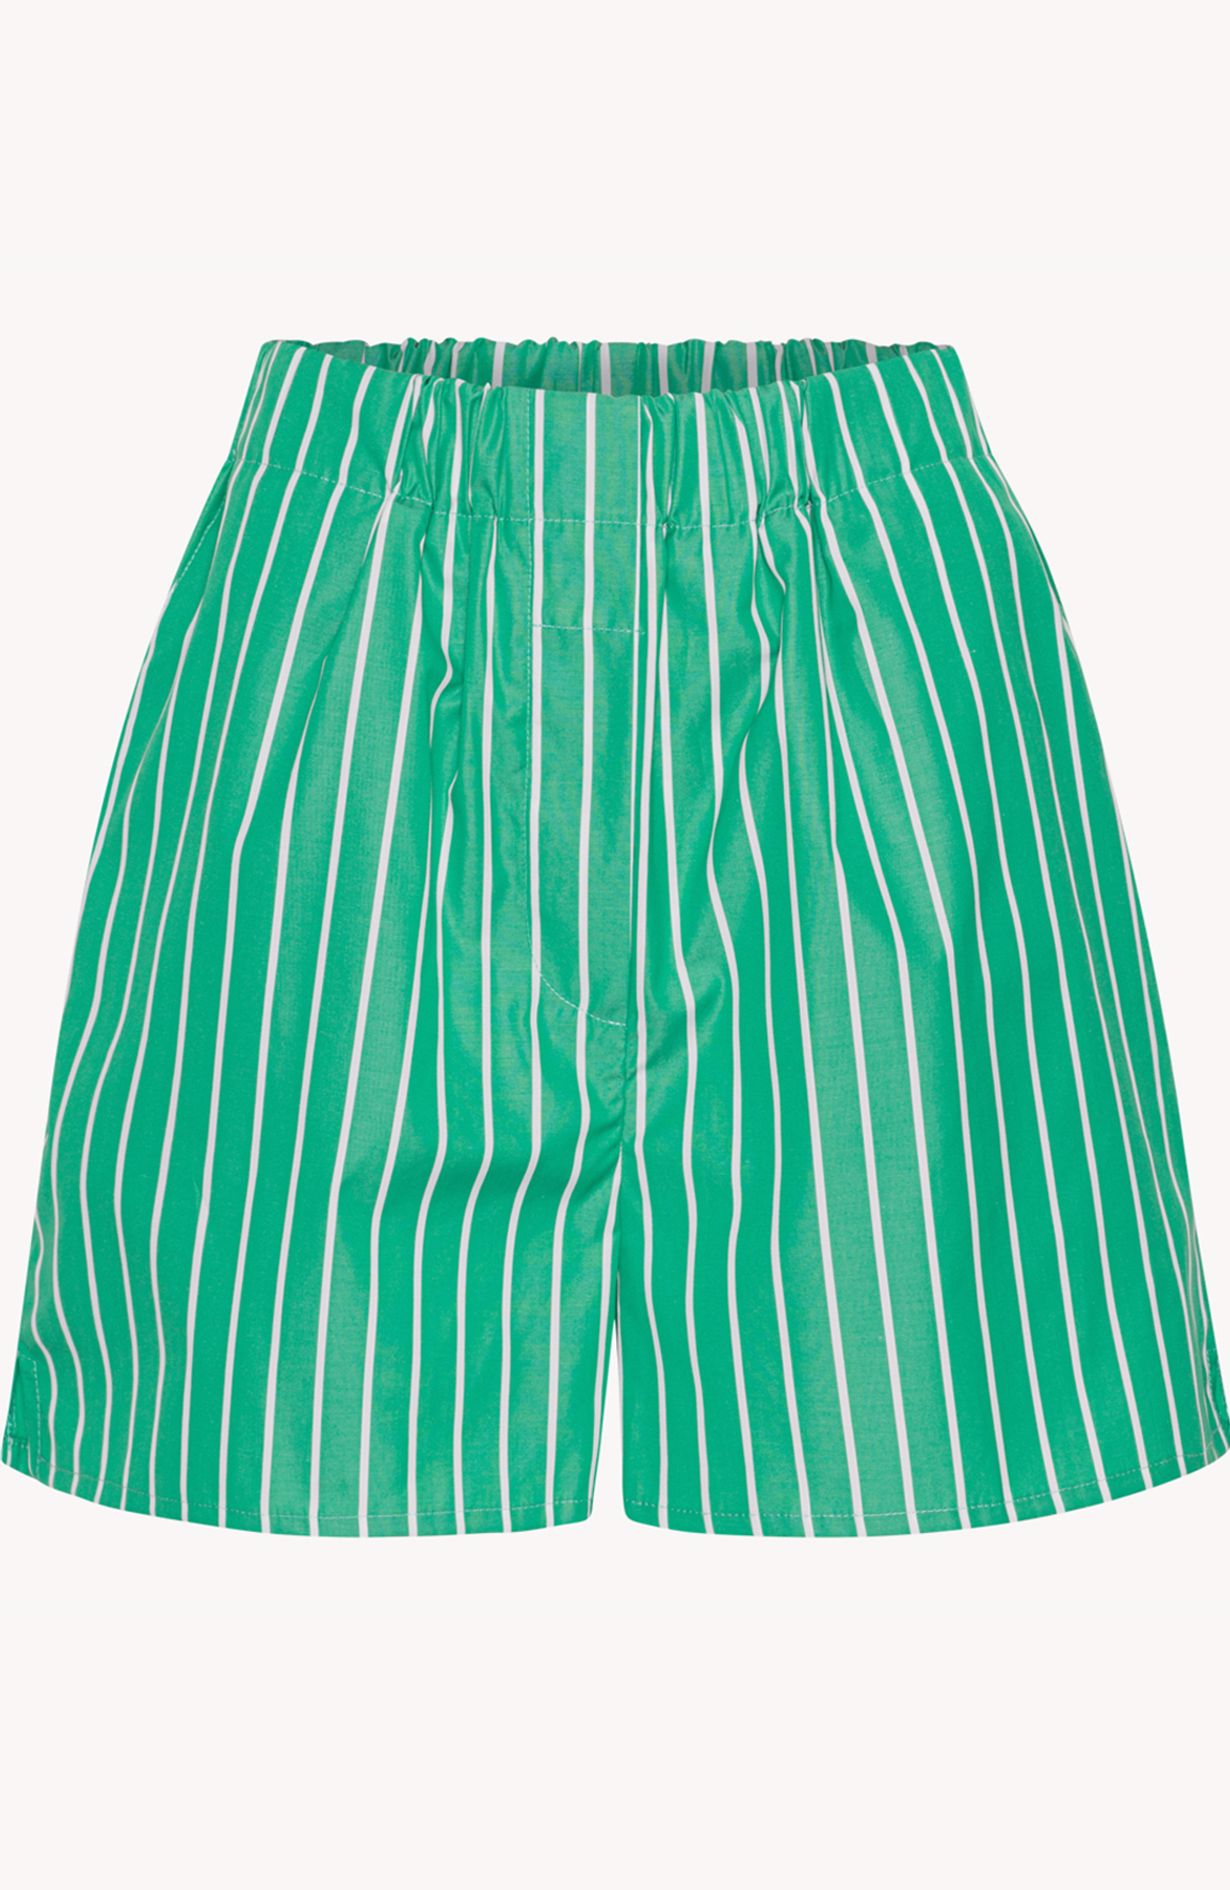 I Blame Lulu Audrey Shorts - Green Stripe